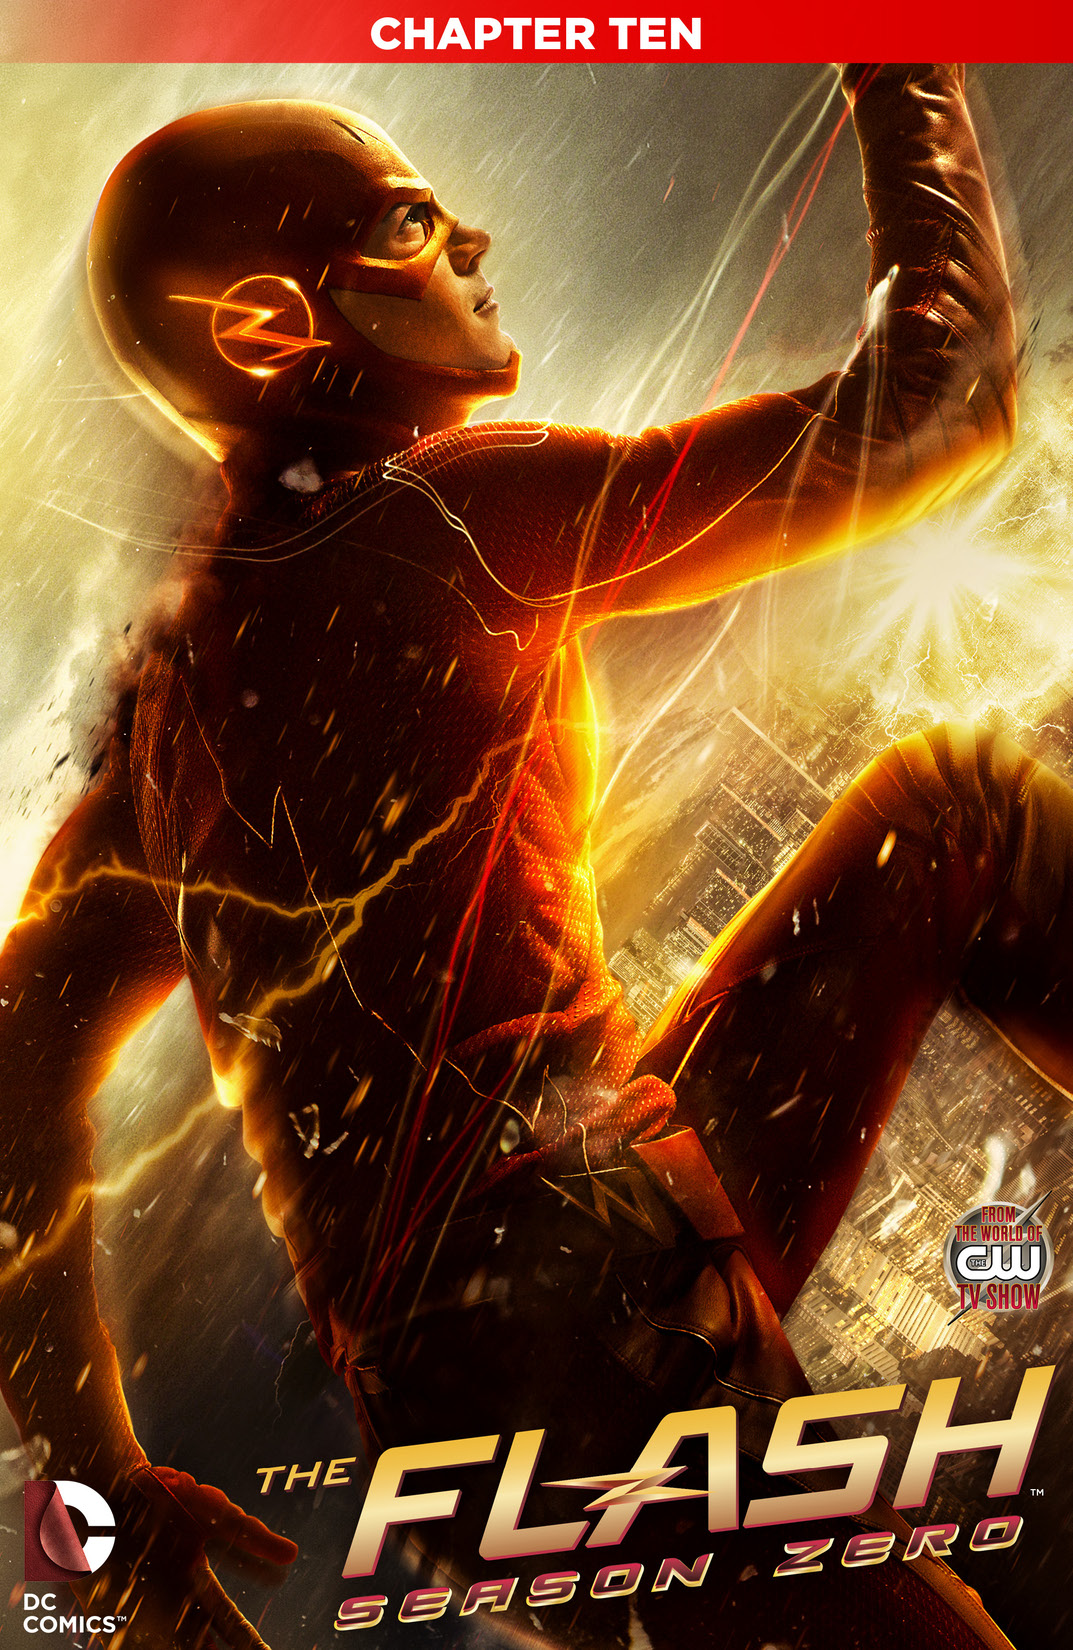 The Flash: Season Zero #10 preview images